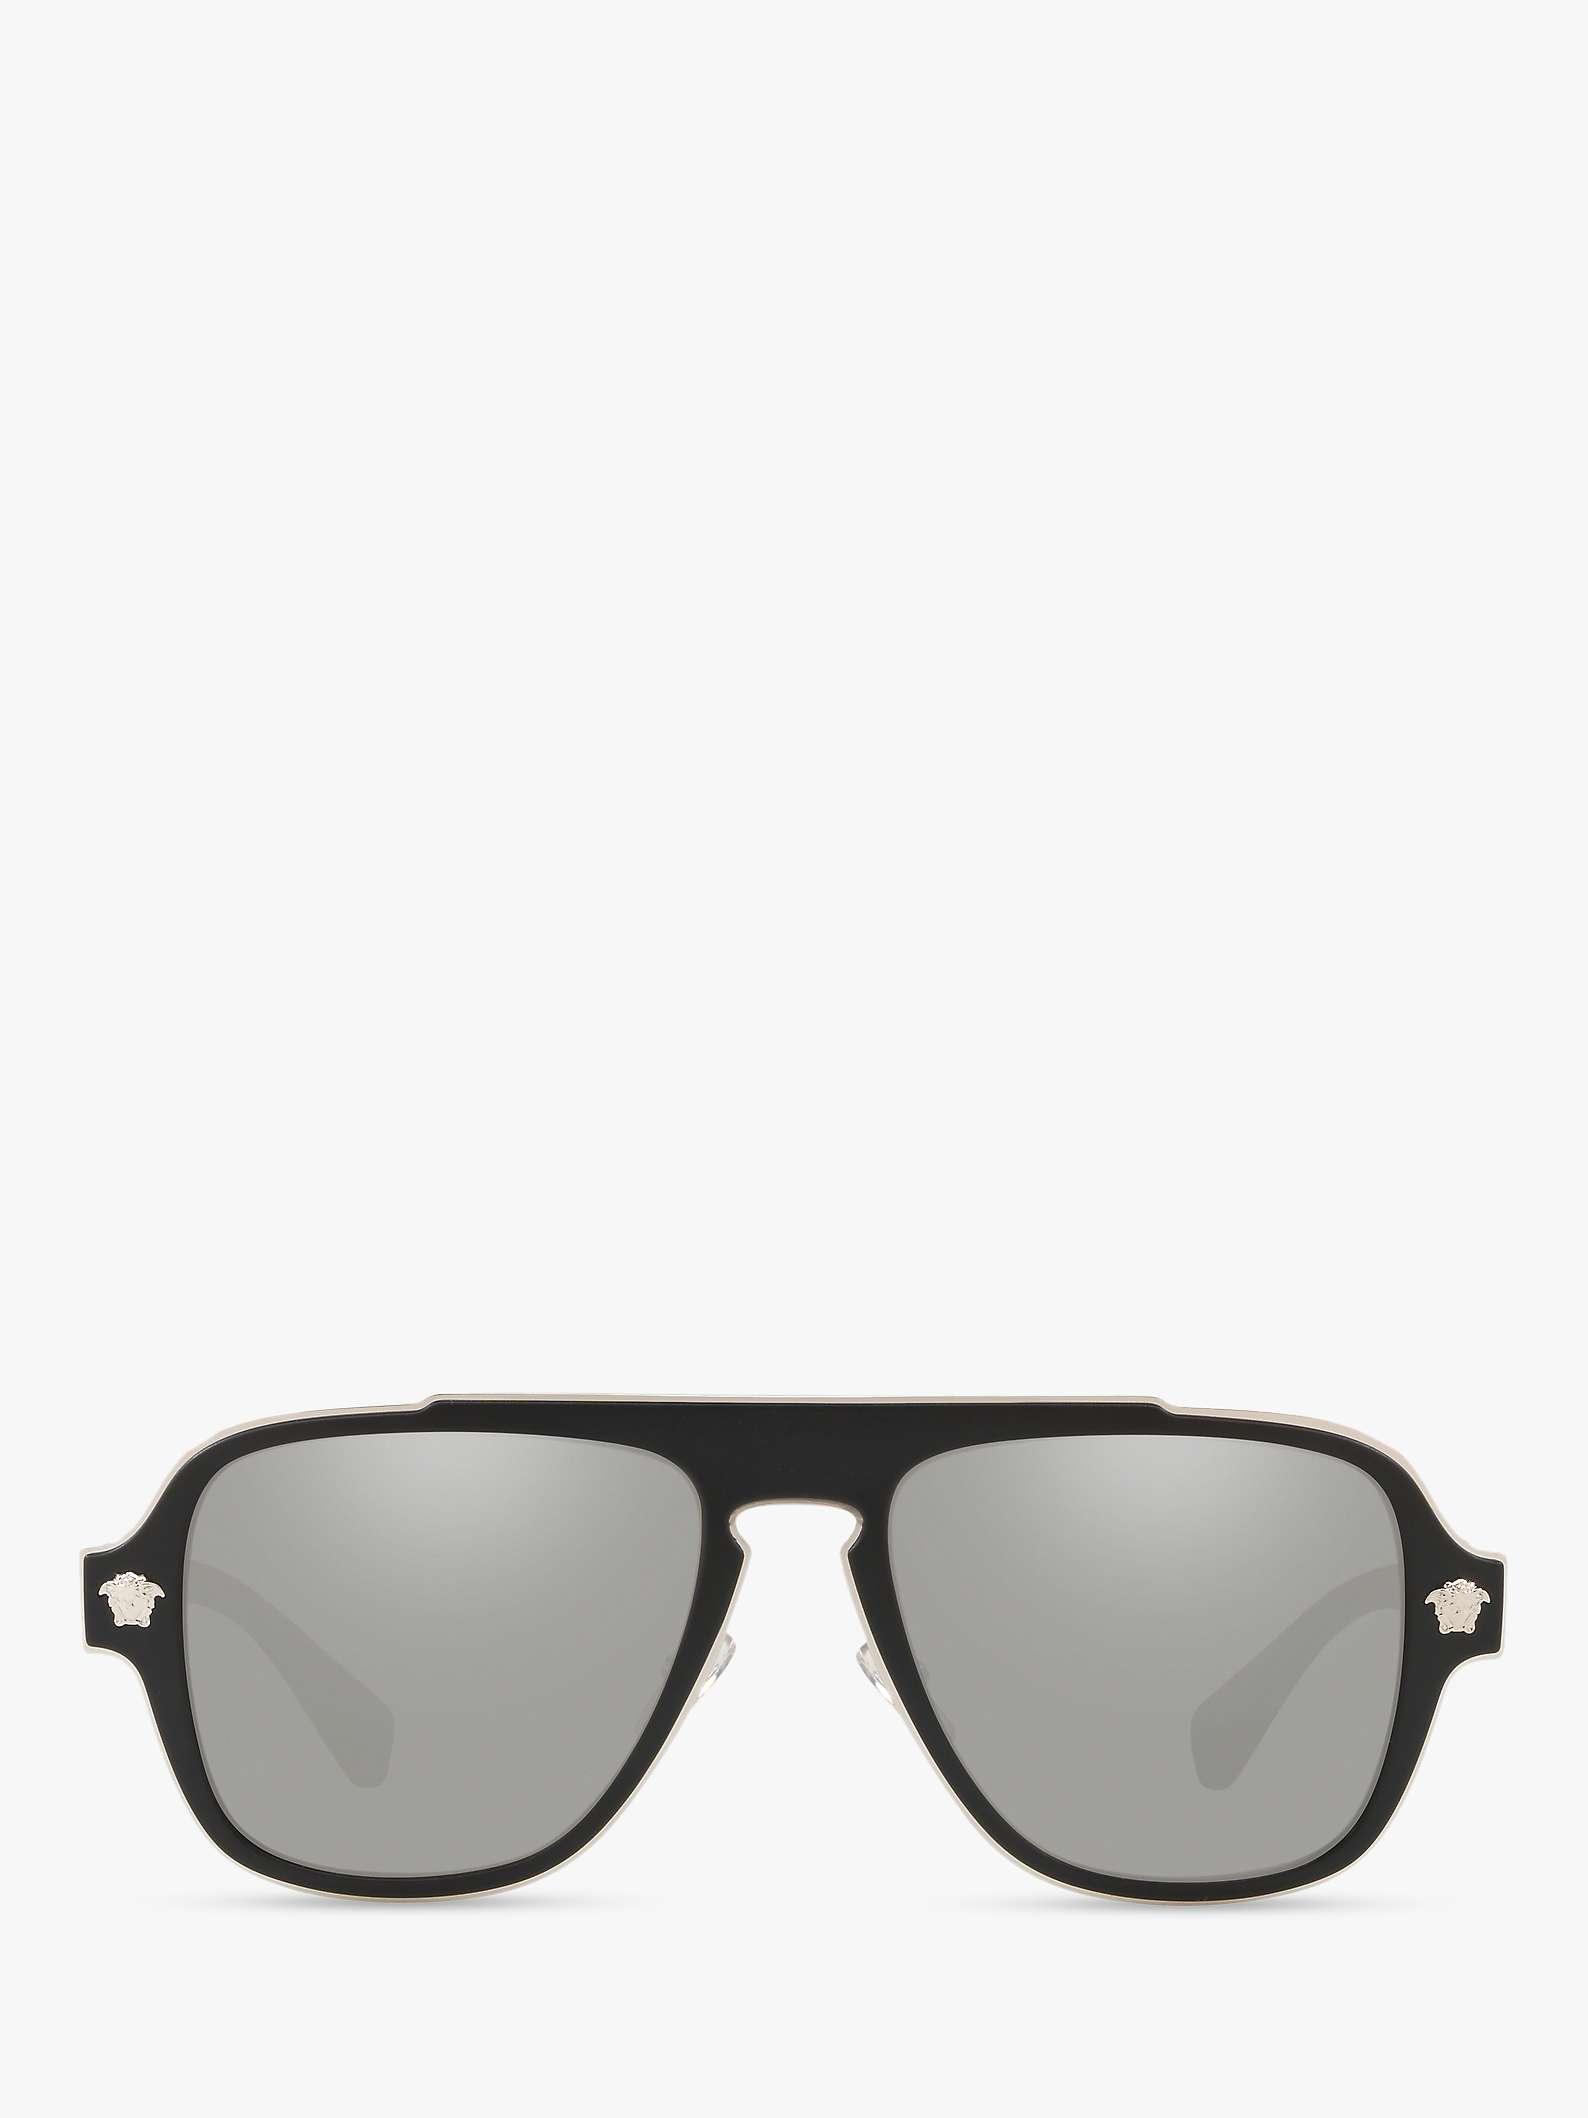 Buy Versace VE2199 Men's Geometric Sunglasses, Black/Silver Mirror Online at johnlewis.com